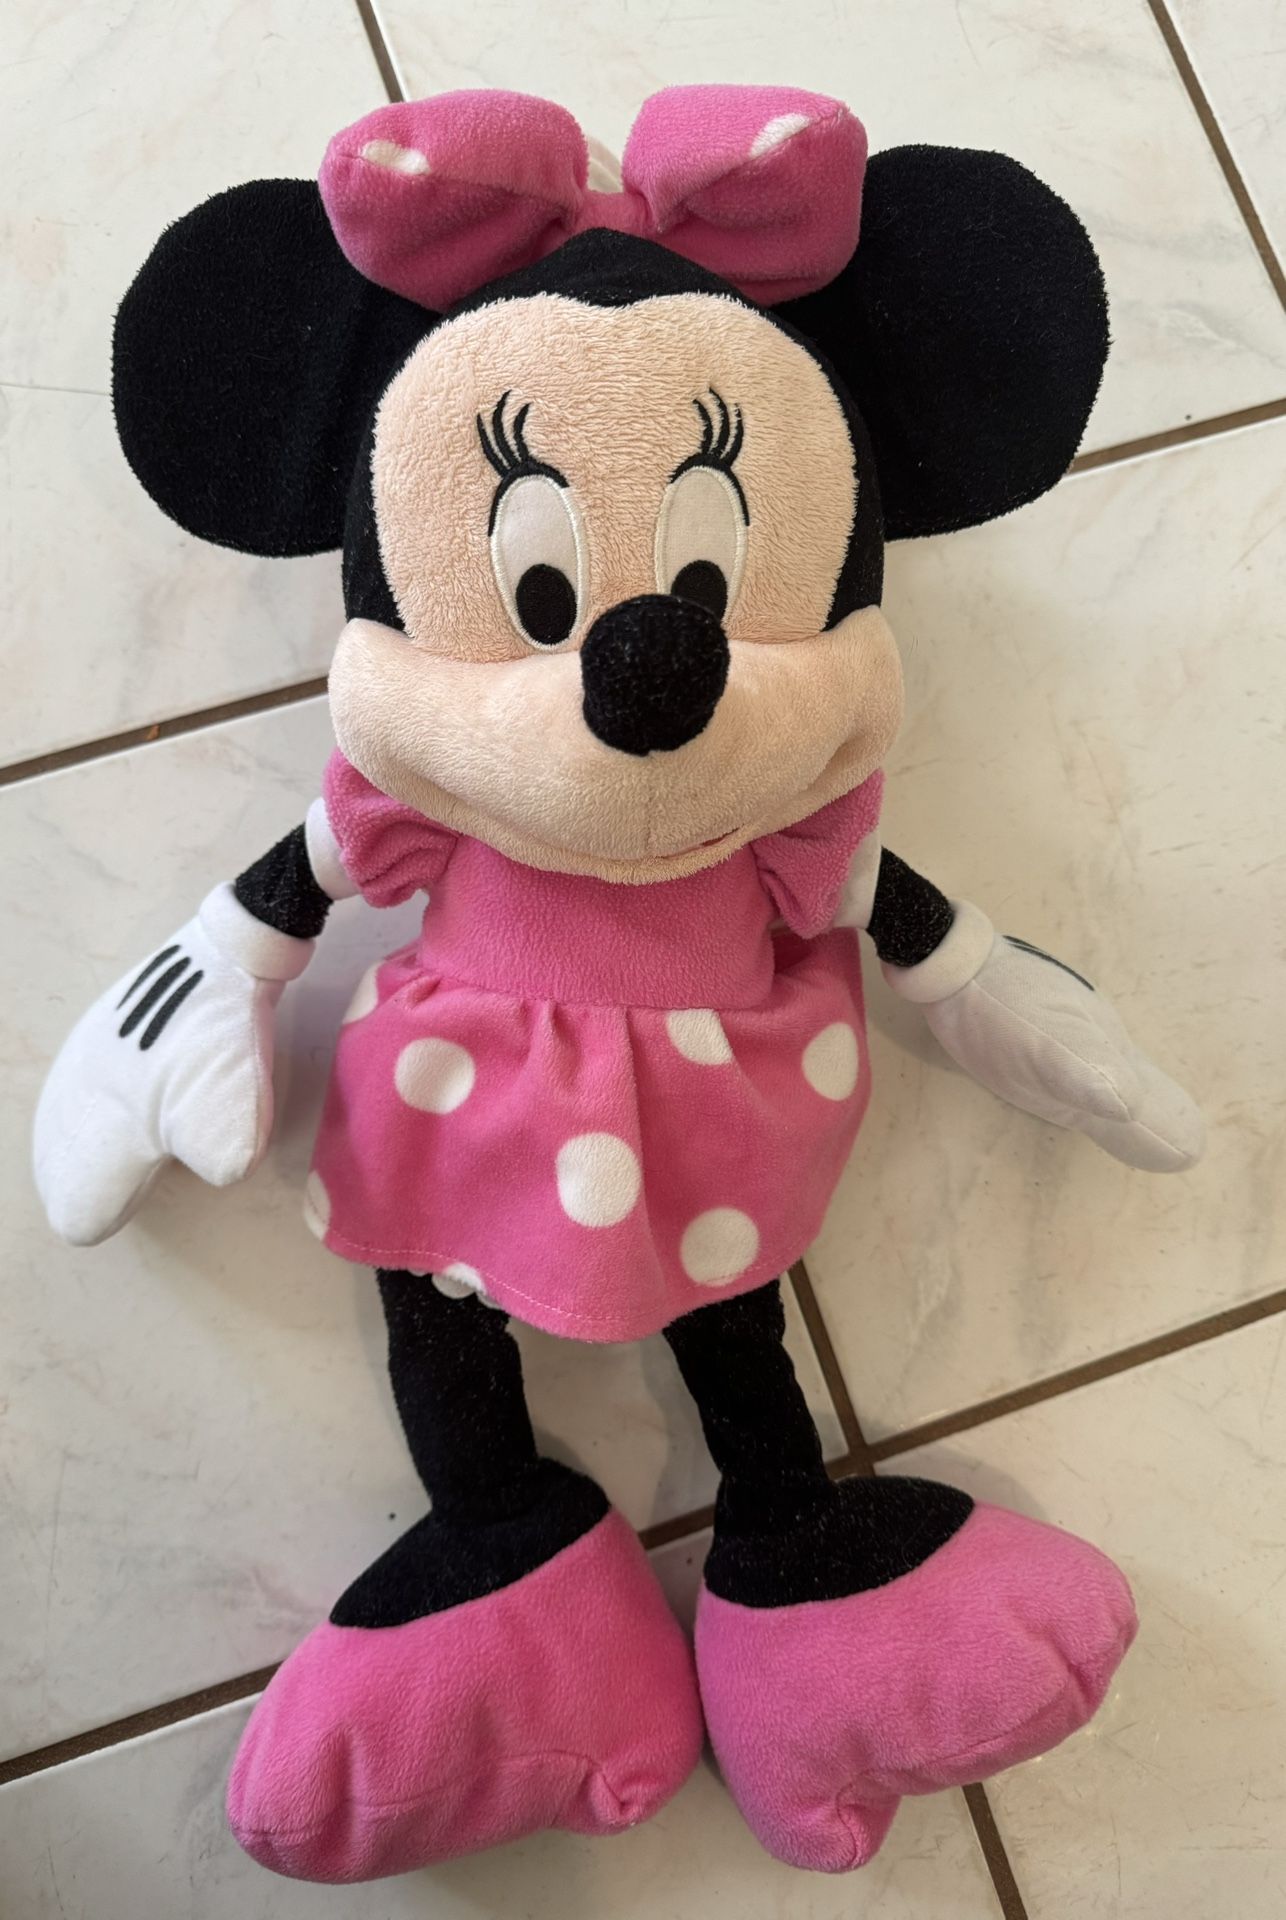 Minnie Mouse Stuffed Animal 19”